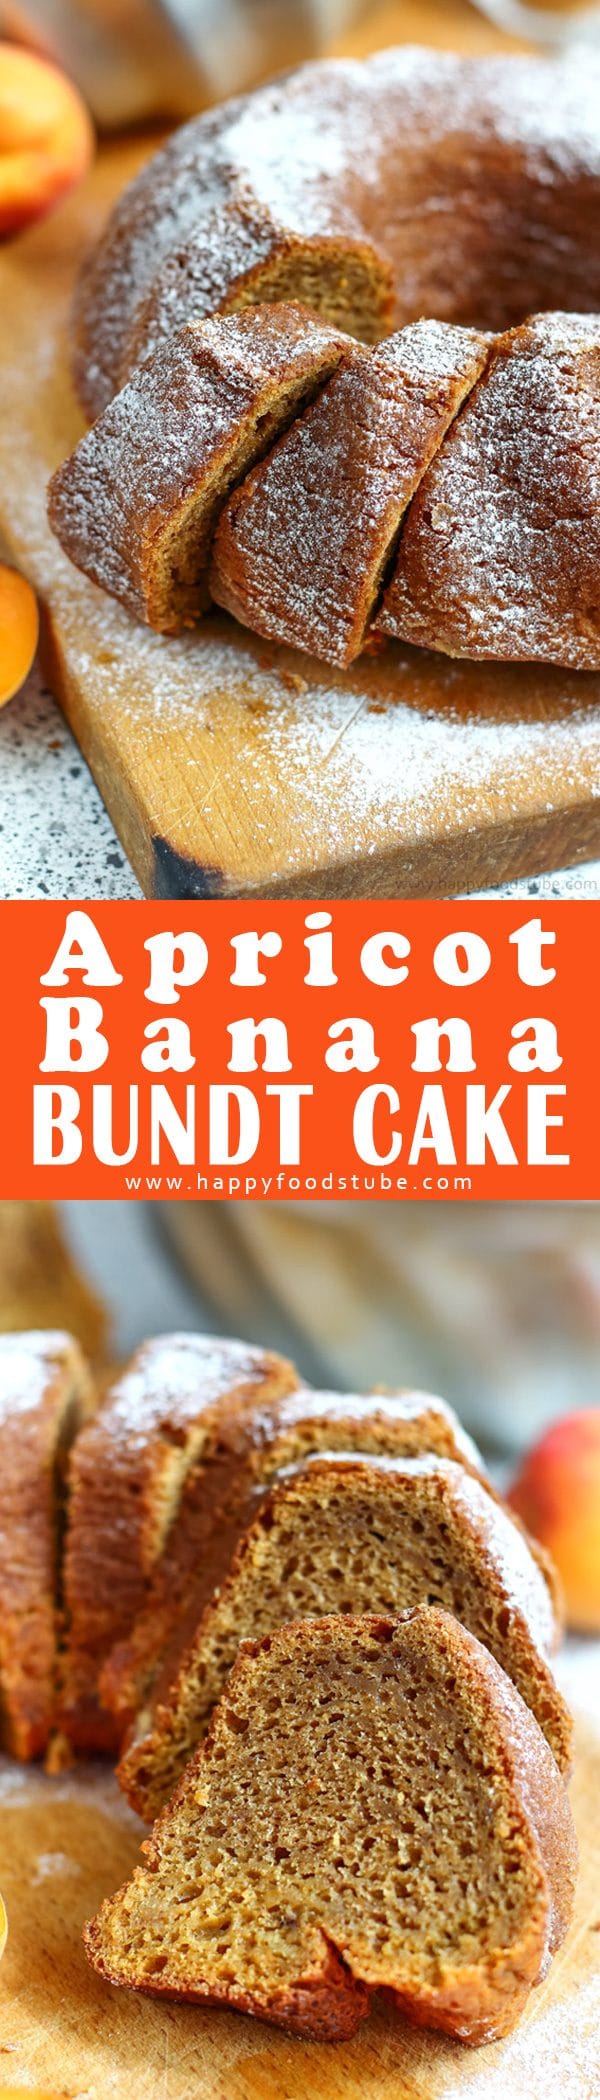 Apricot Banana Bundt Cake Recipe Collage